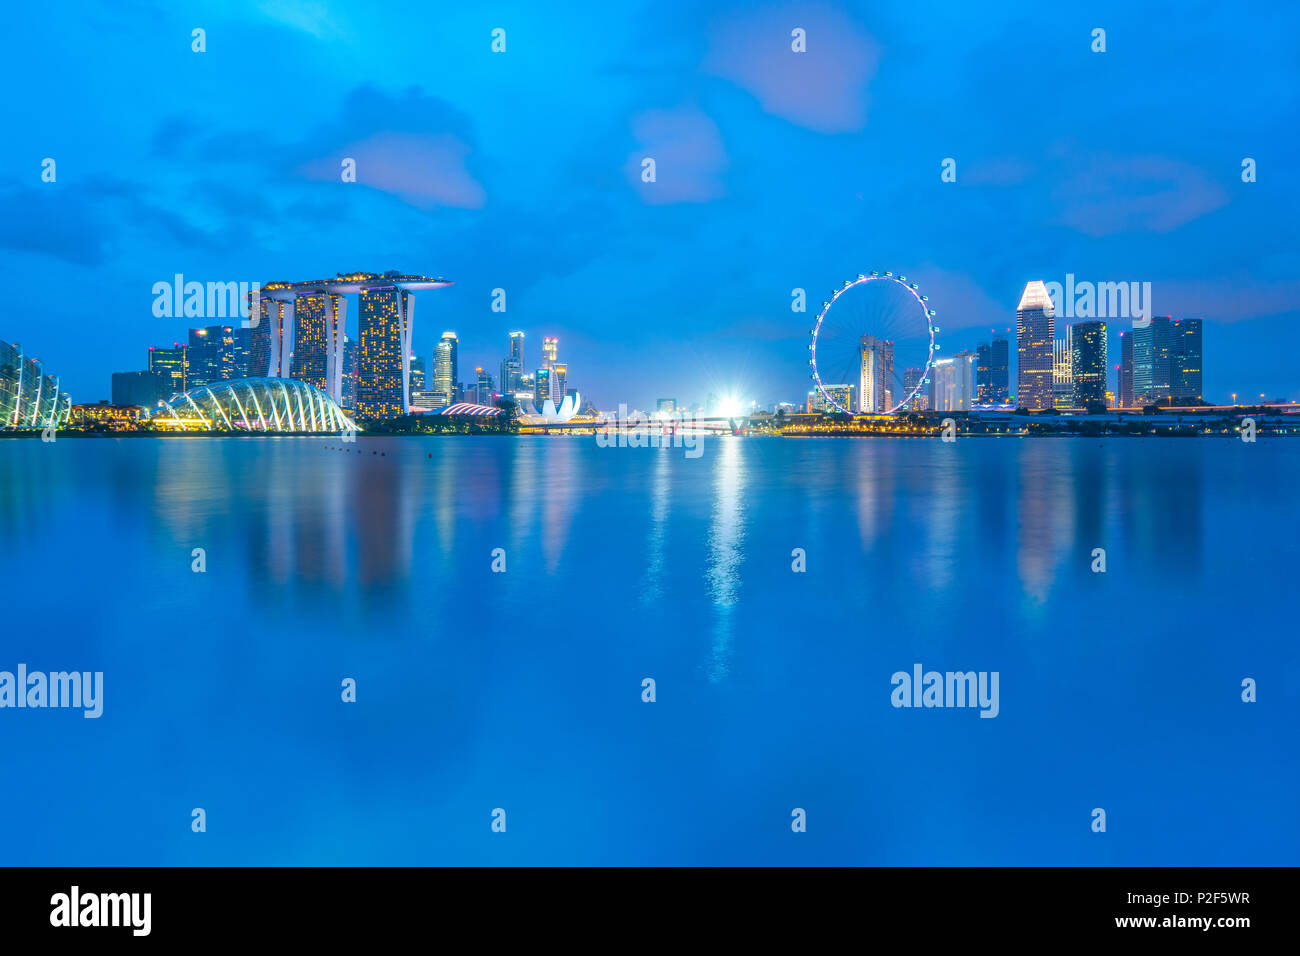 Singapore city skyline with Marina Bay at night. Stock Photo